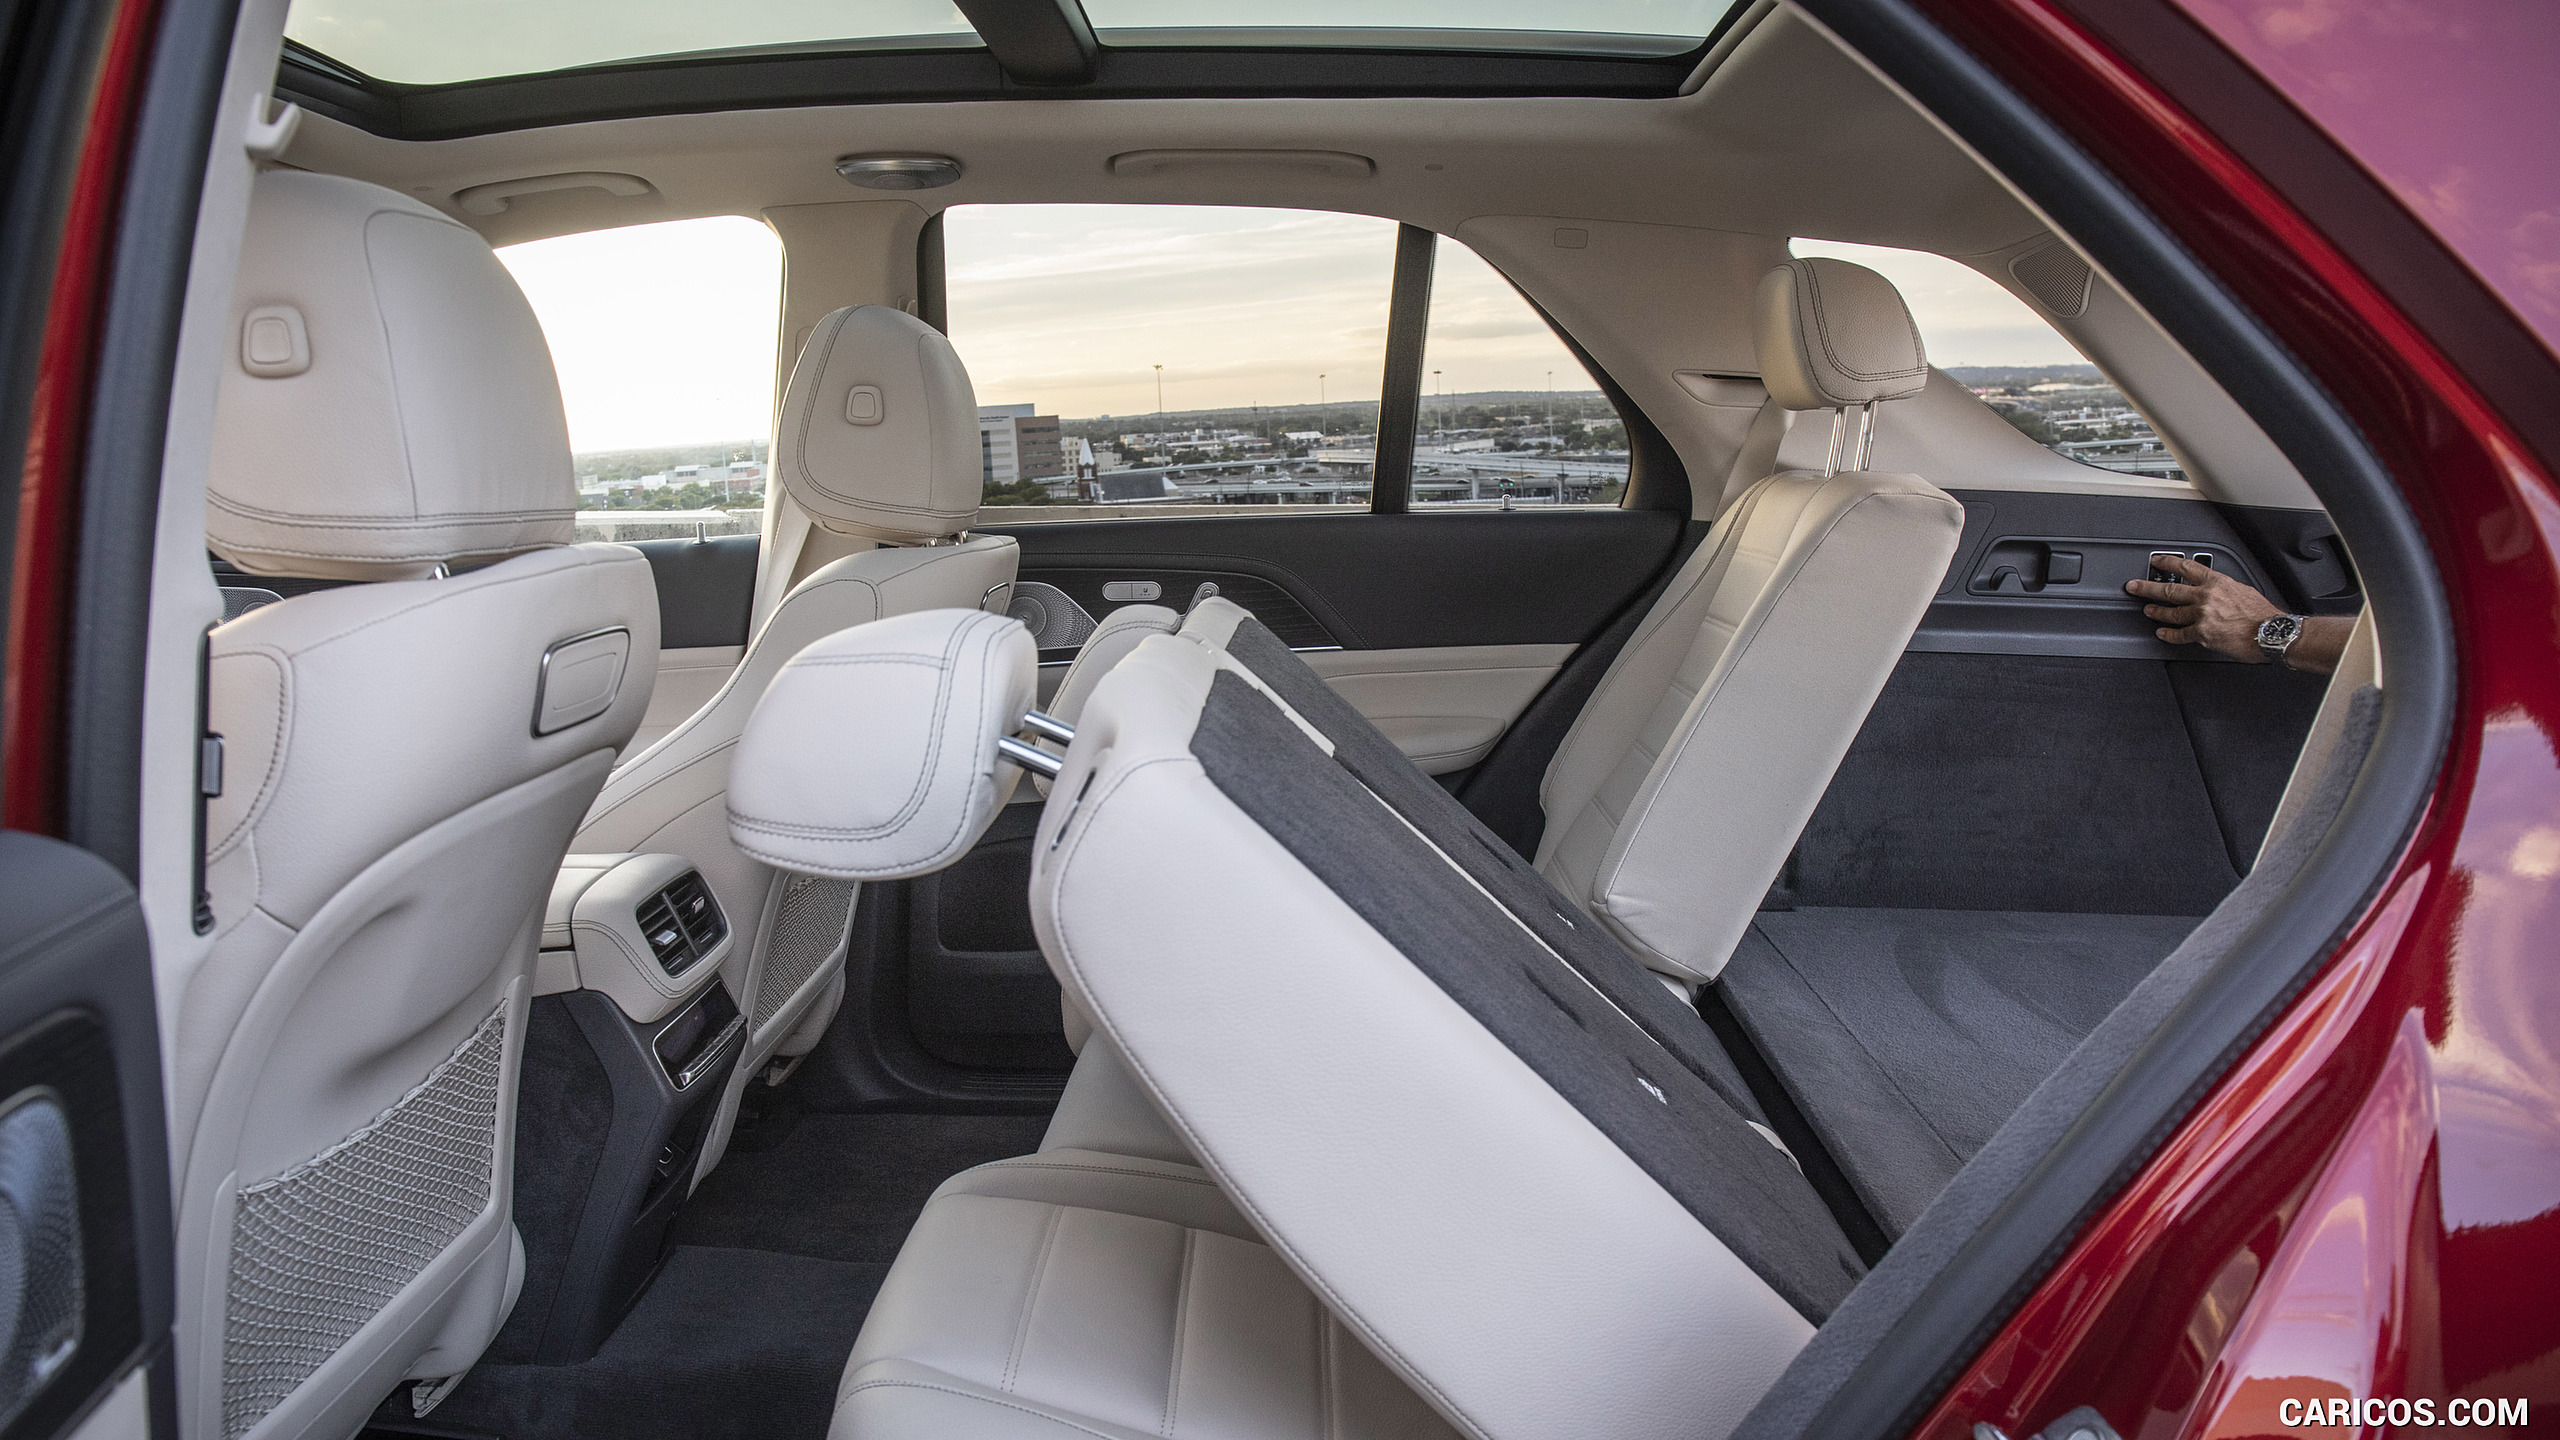 2020 Mercedes-Benz GLE 450 4MATIC (Color: Designo Hyazinth Red Metallic; US-Spec) - Interior, Rear Seats, #336 of 358